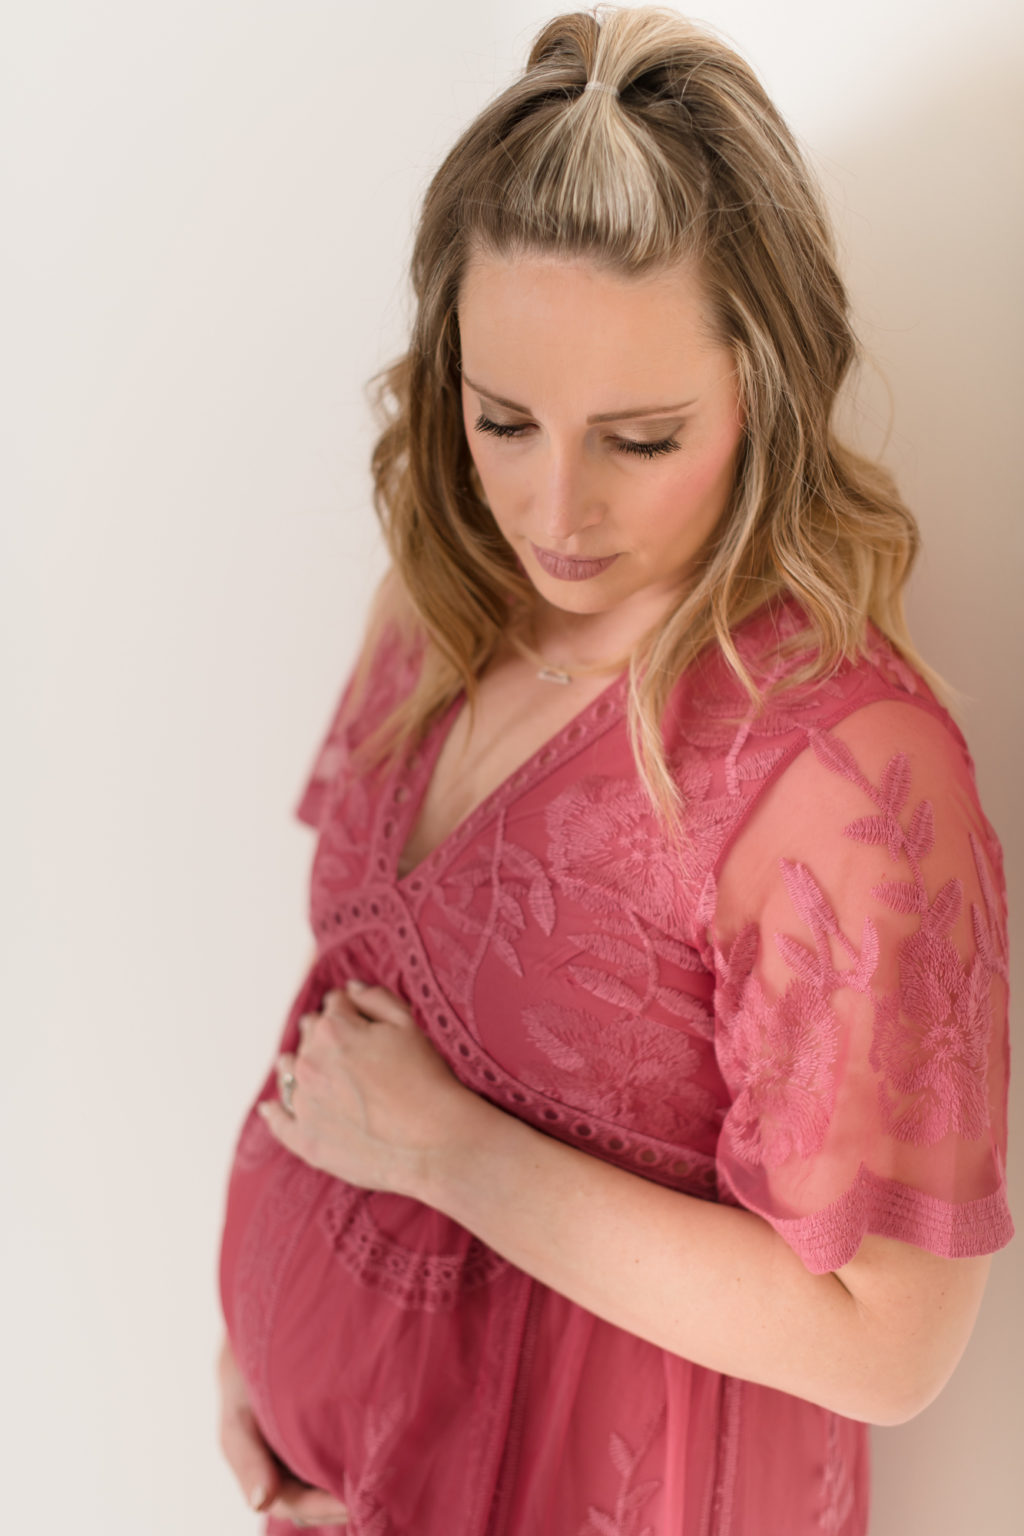 Paige | Maternity Session - Megan O'Hare Photography